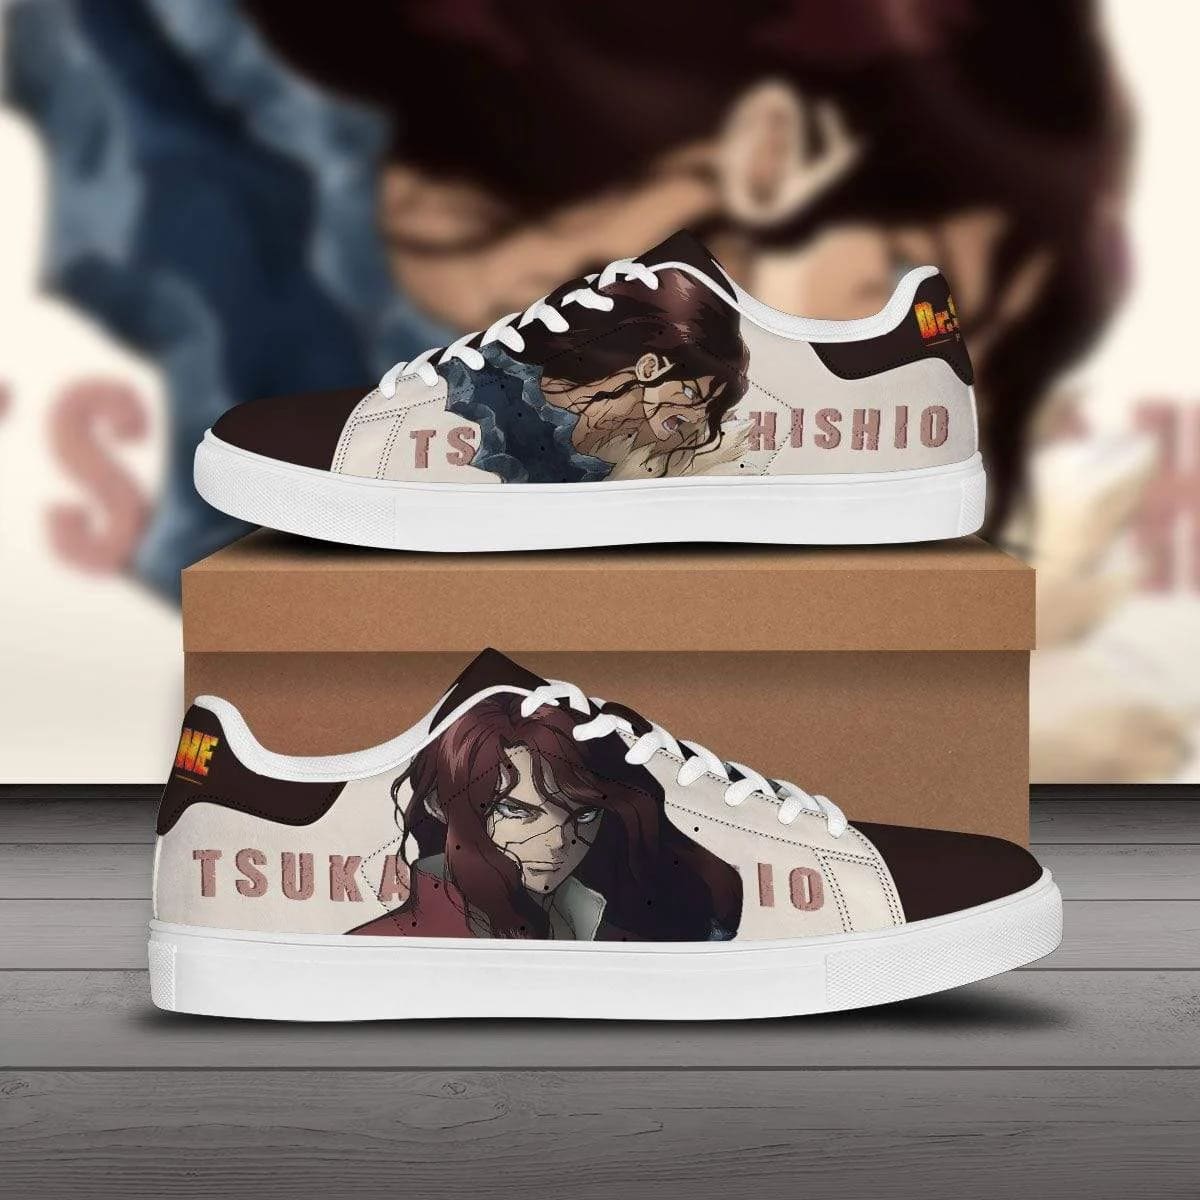 tsukasa shishio skate sneakers custom dr. stone anime shoes